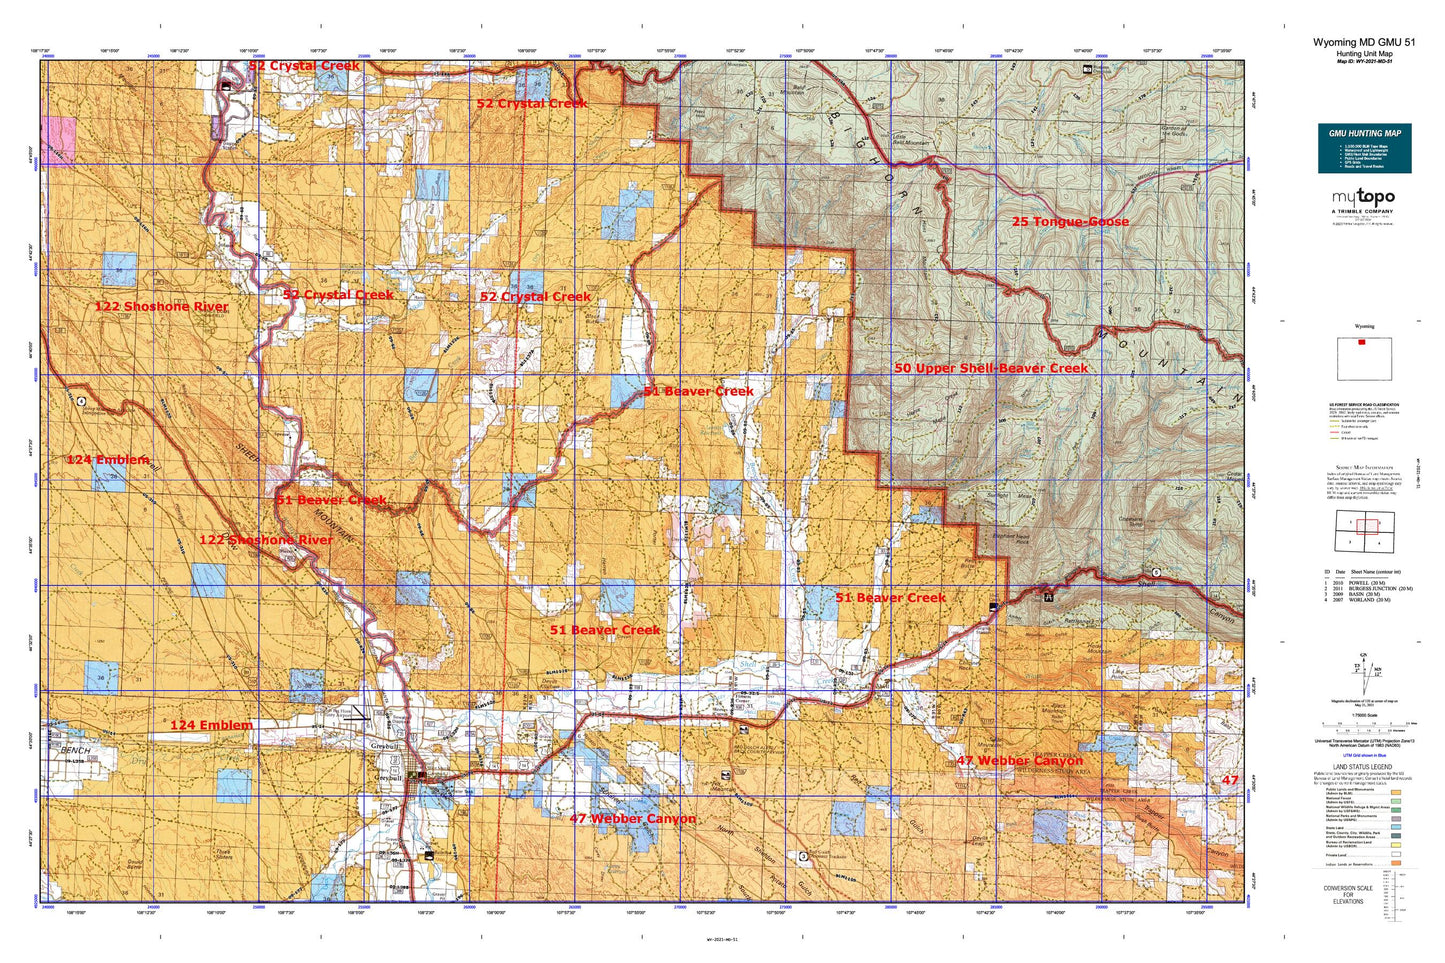 Wyoming Mule Deer GMU 51 Map Image